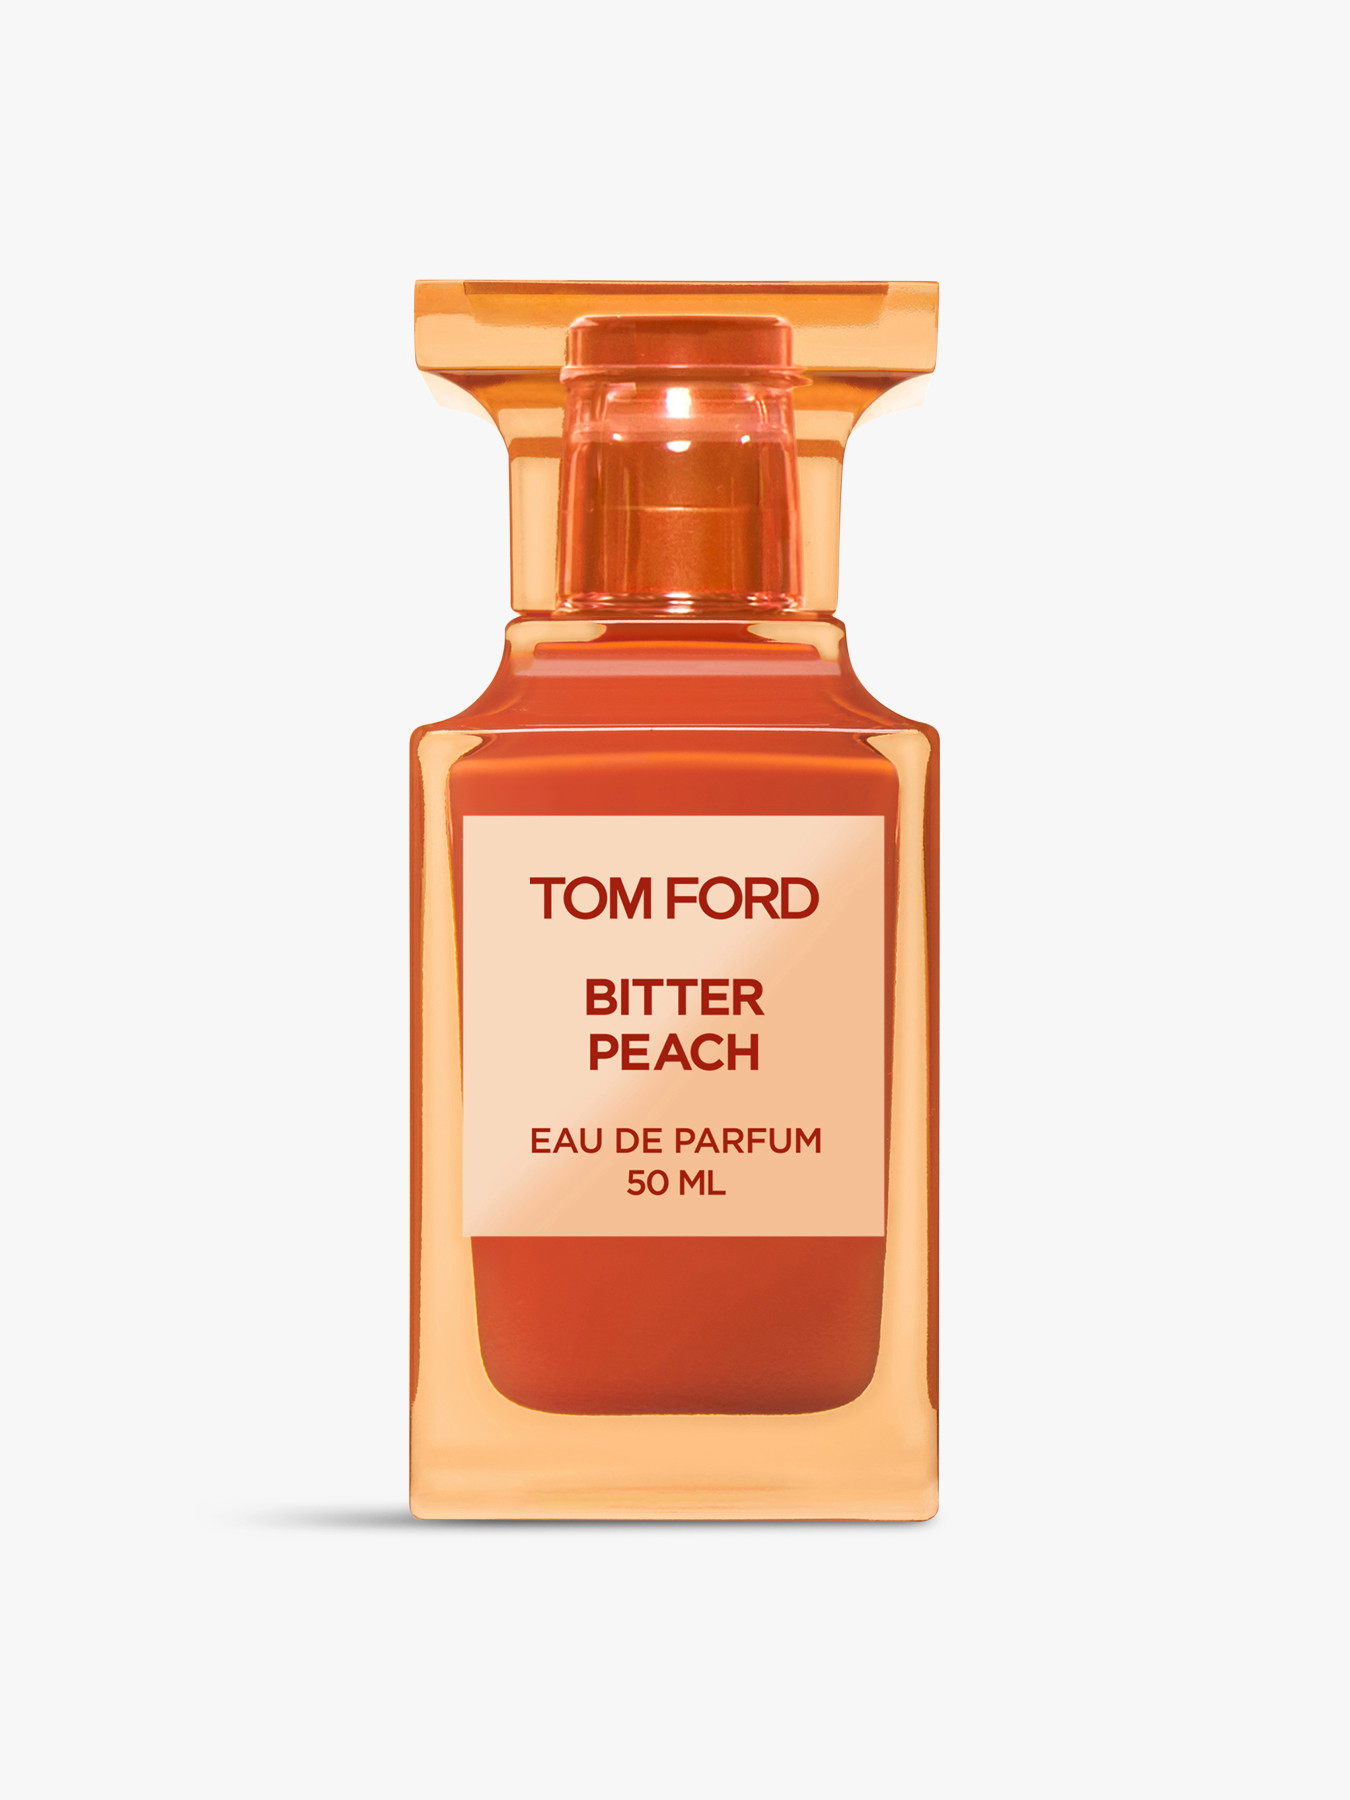 Tom Ford Bitter Peach 50ml